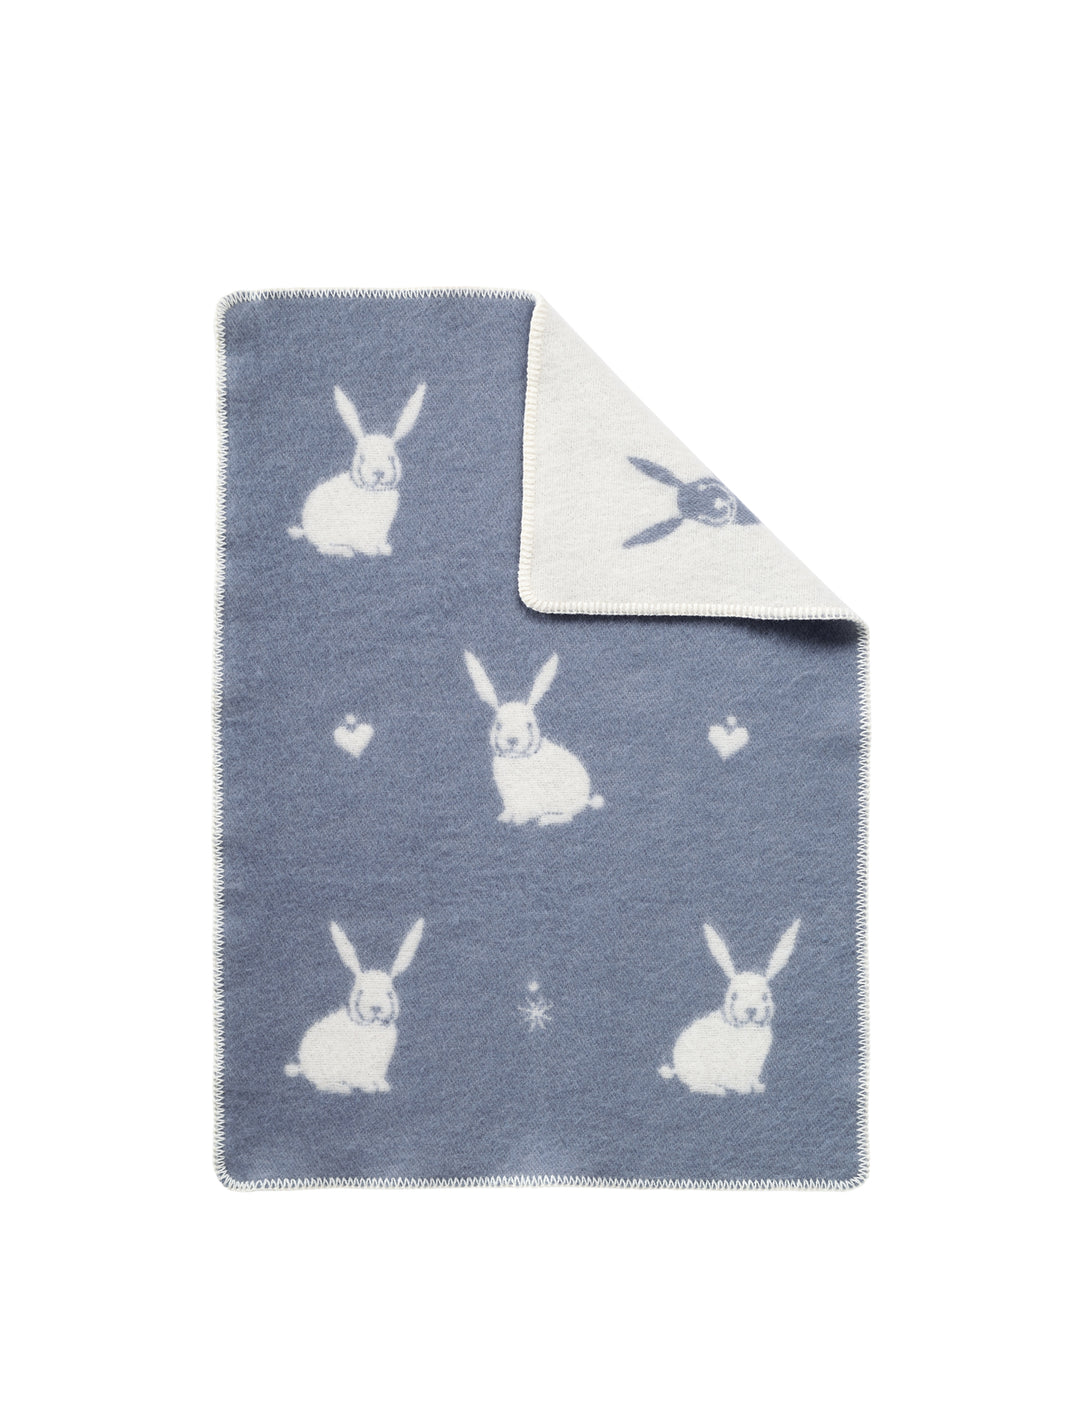 Small Grey Bunny Wool Blanket